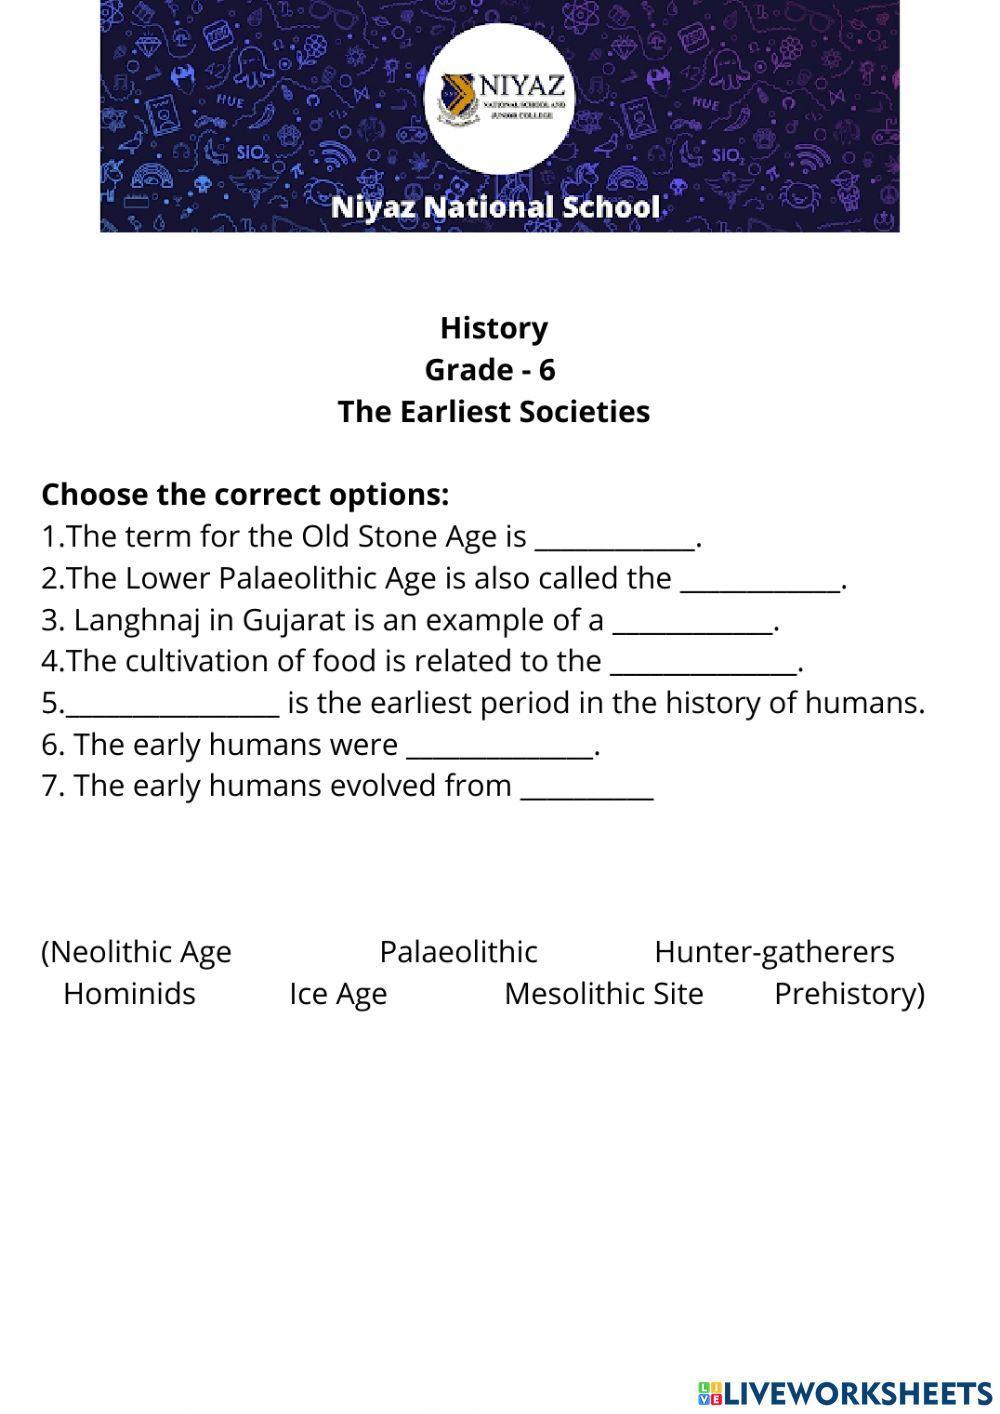 The Earliest Societies